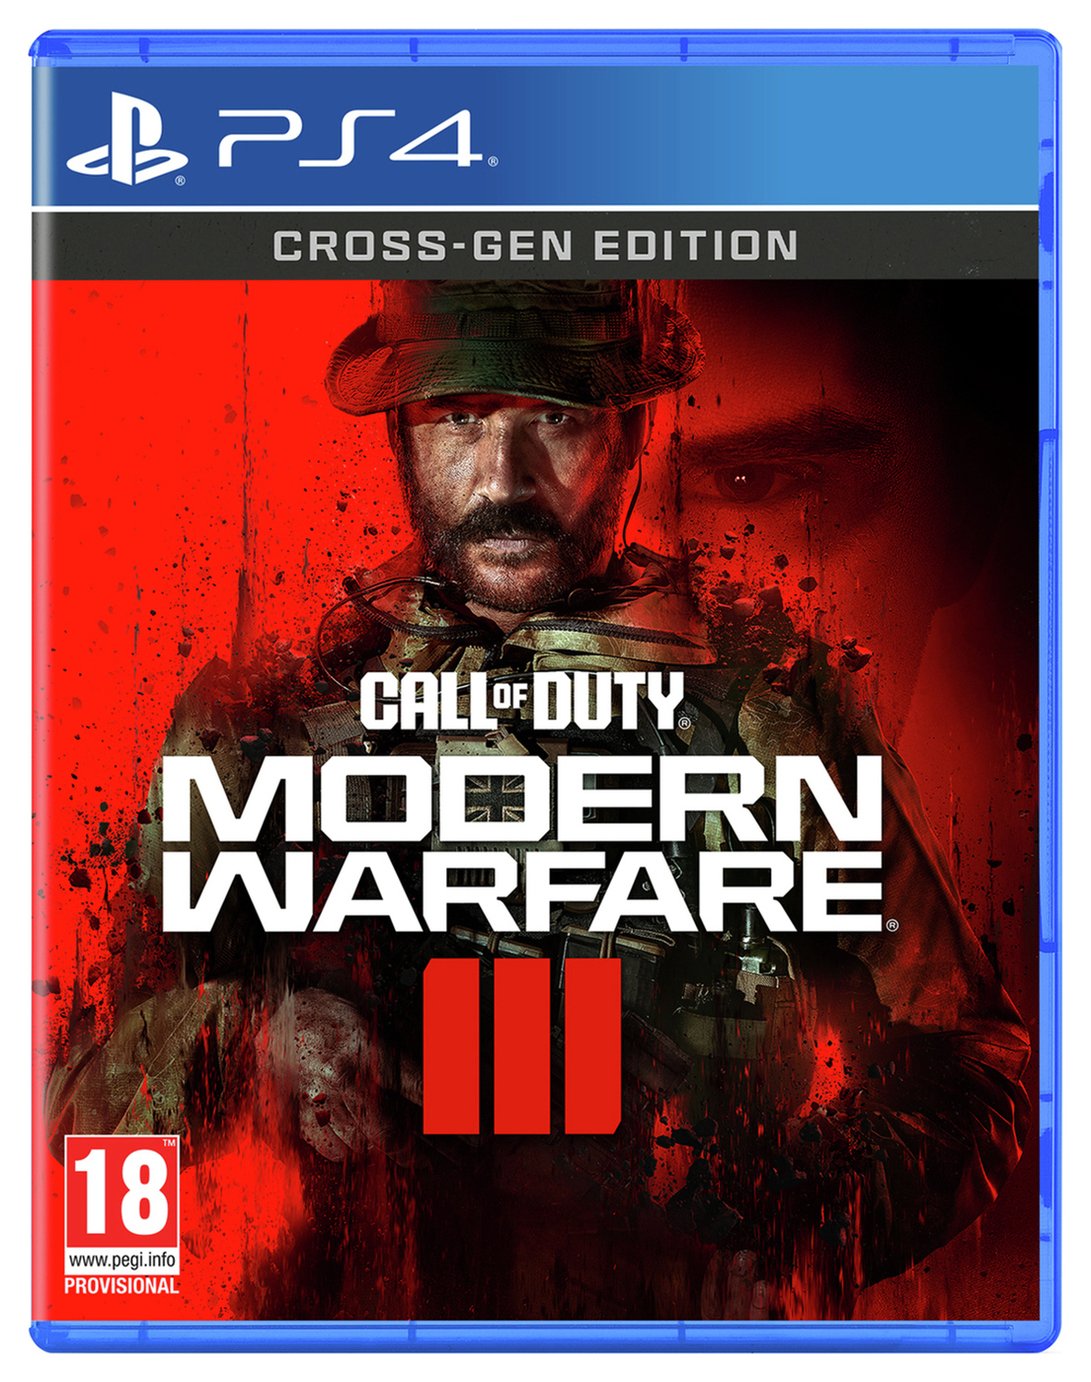 Call of Duty: Modern Warfare III PS4 Game